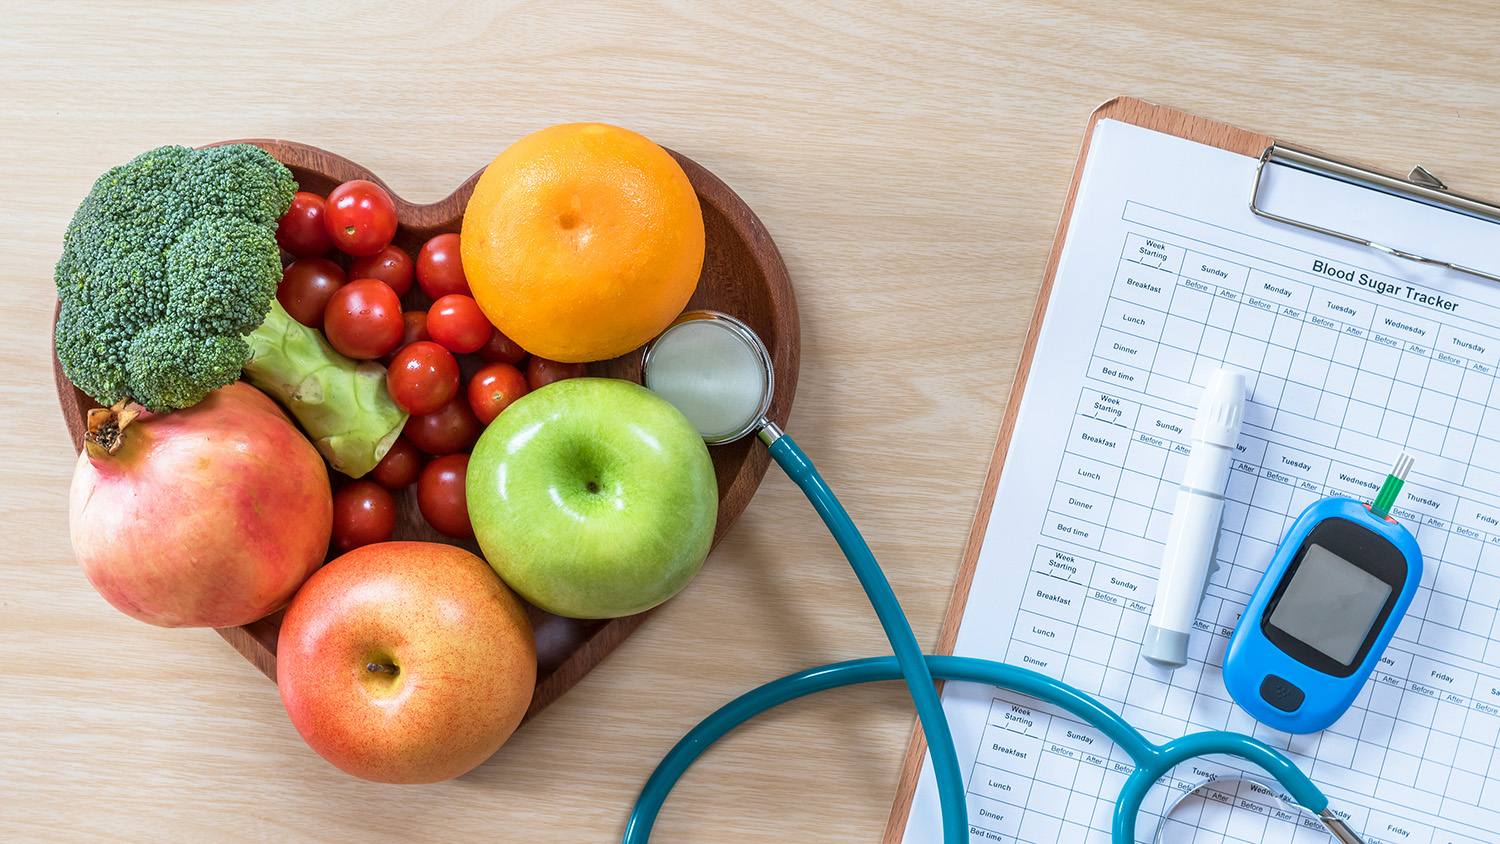 diabetes monitor next to a heart-shaped fruit basket